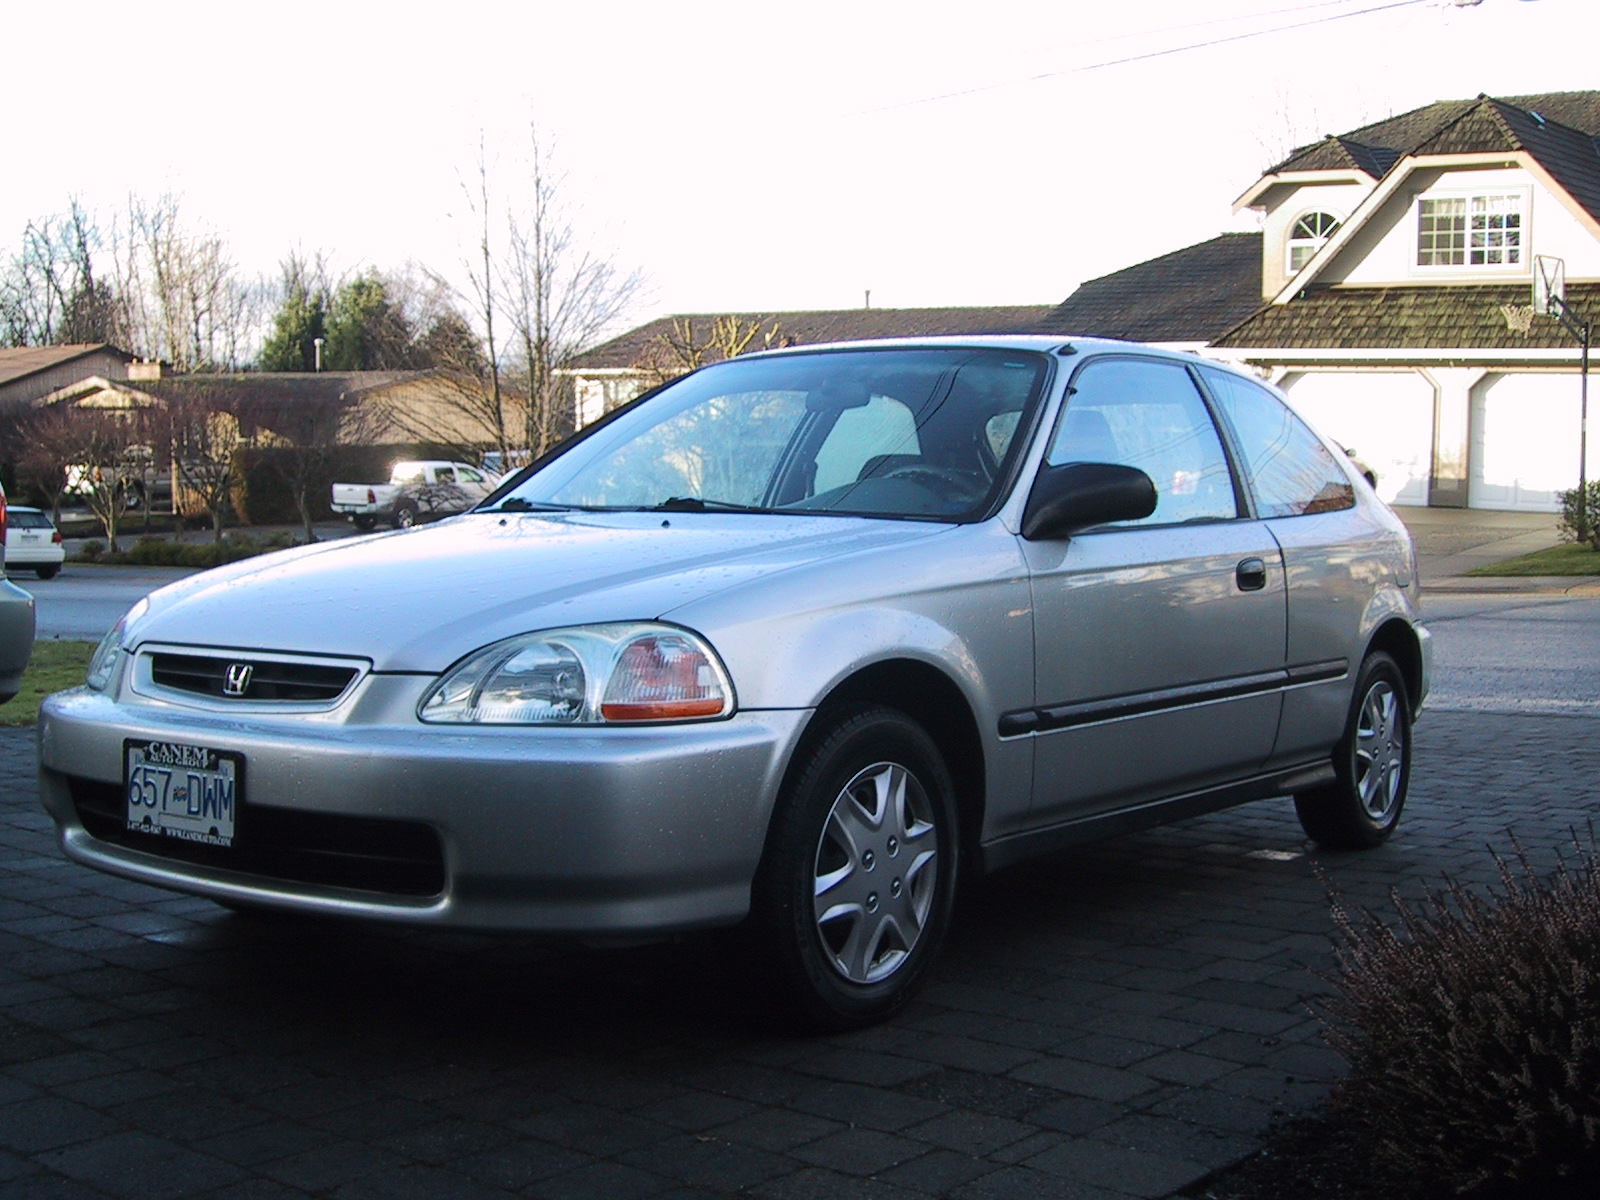 1996 Honda civic cx hatchback reviews #2